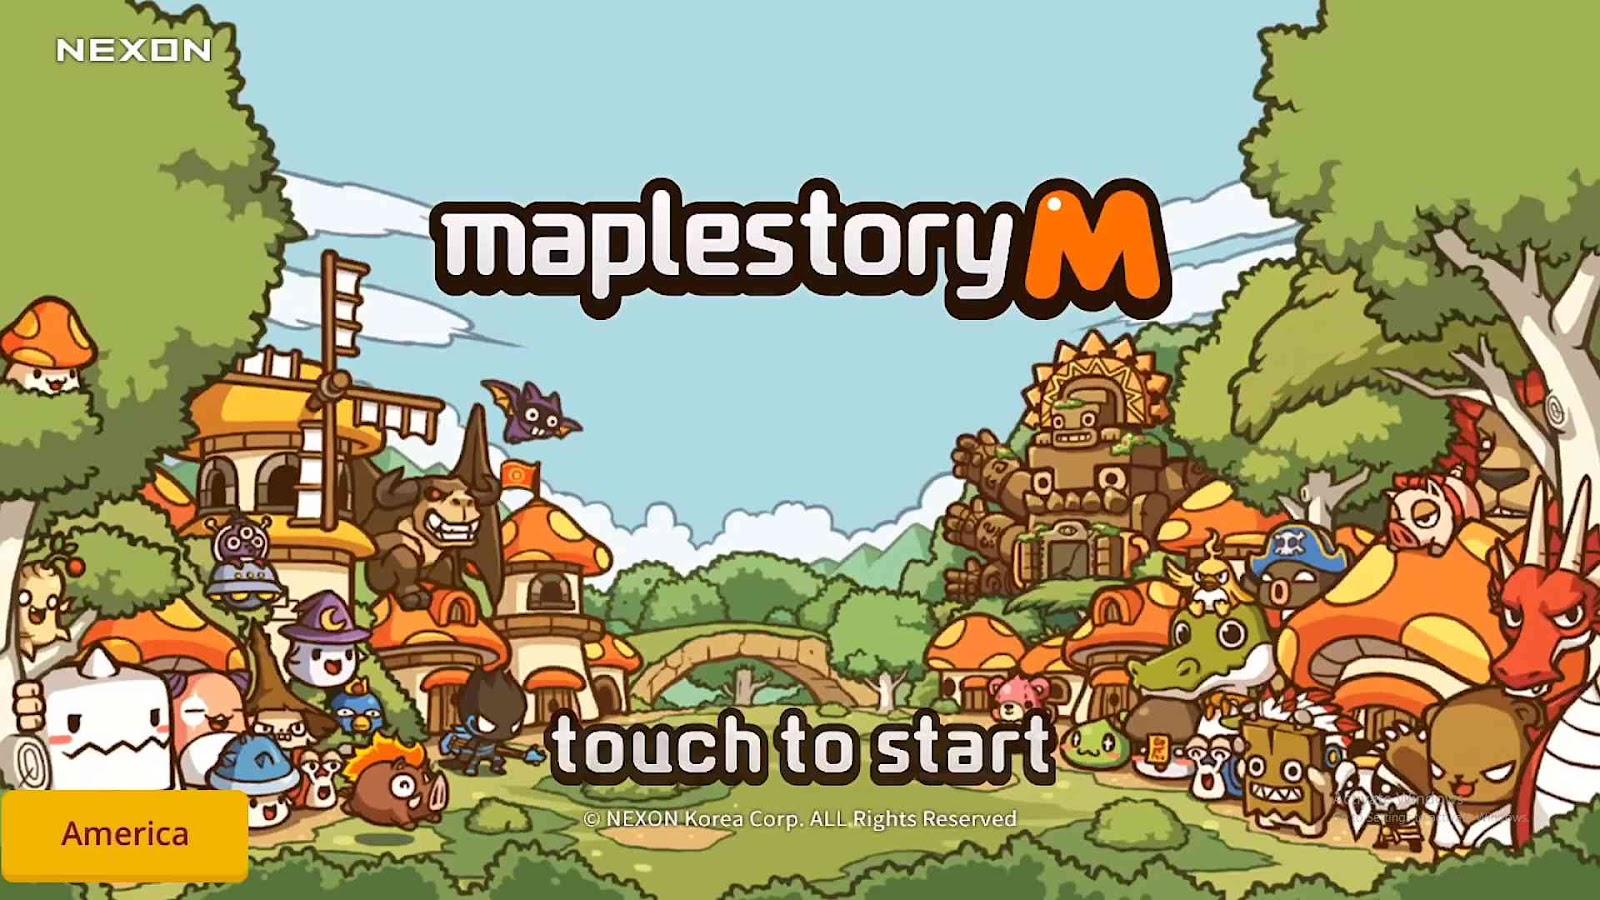 MapleStory M - Fantasy MMORPG